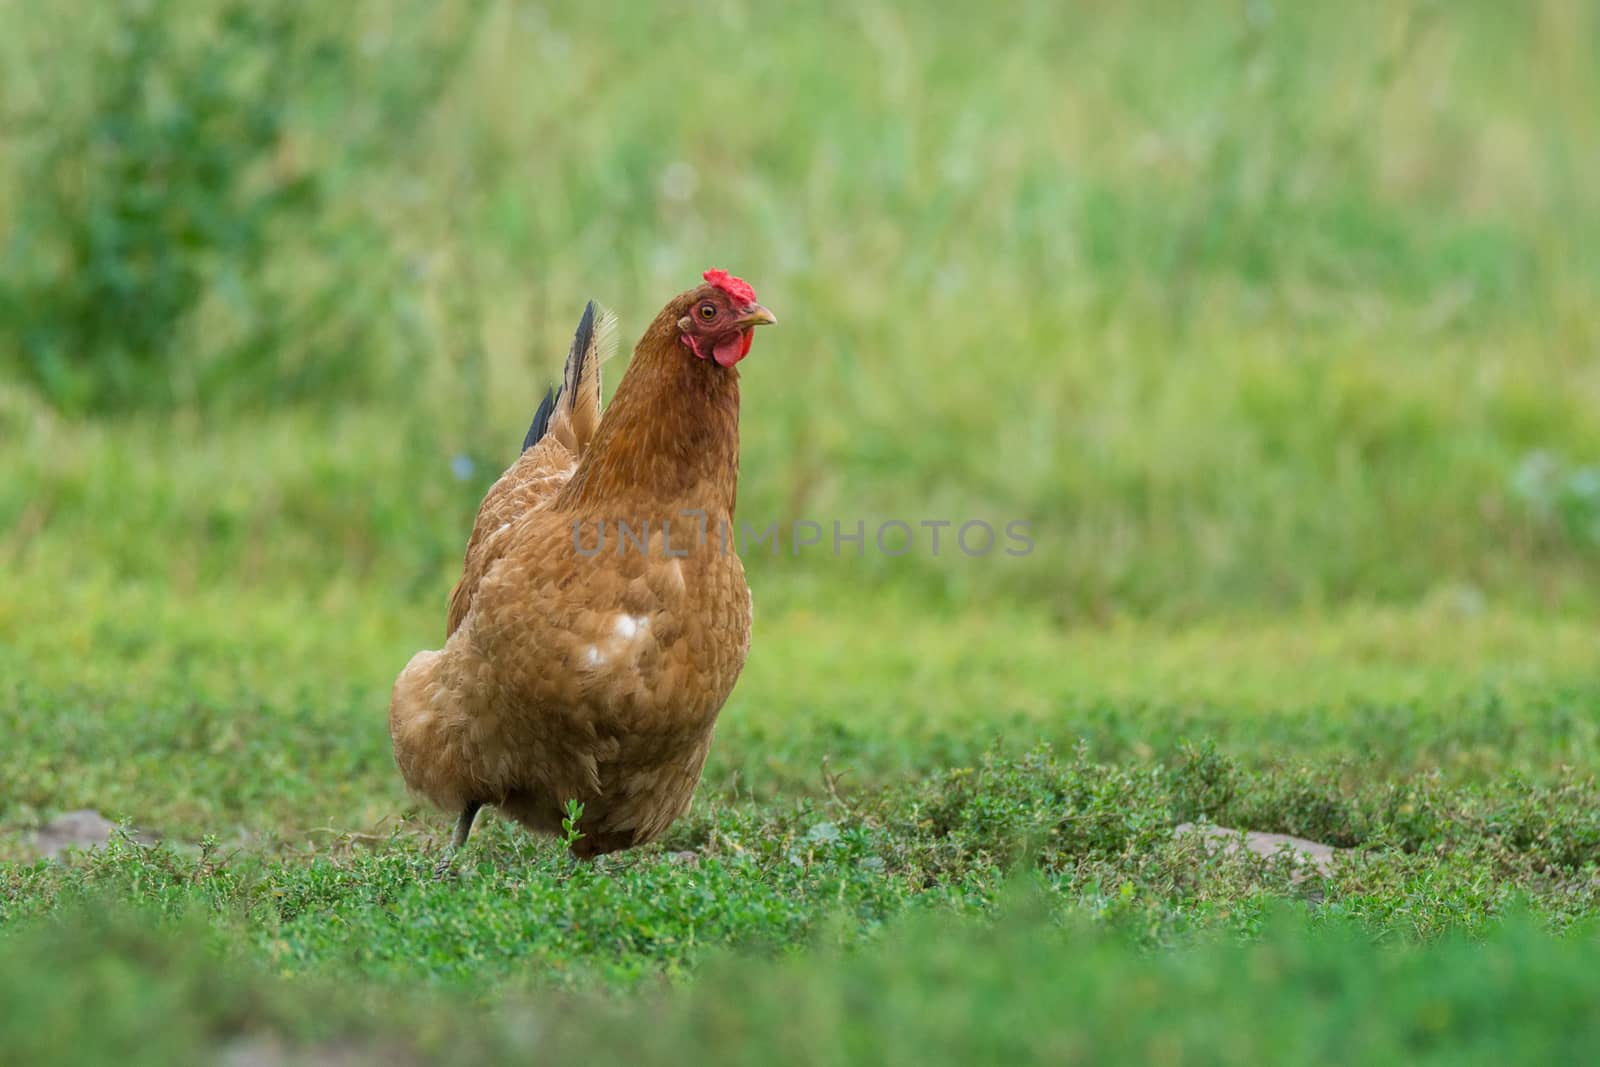 The chicken runs on the grass by AlexBush